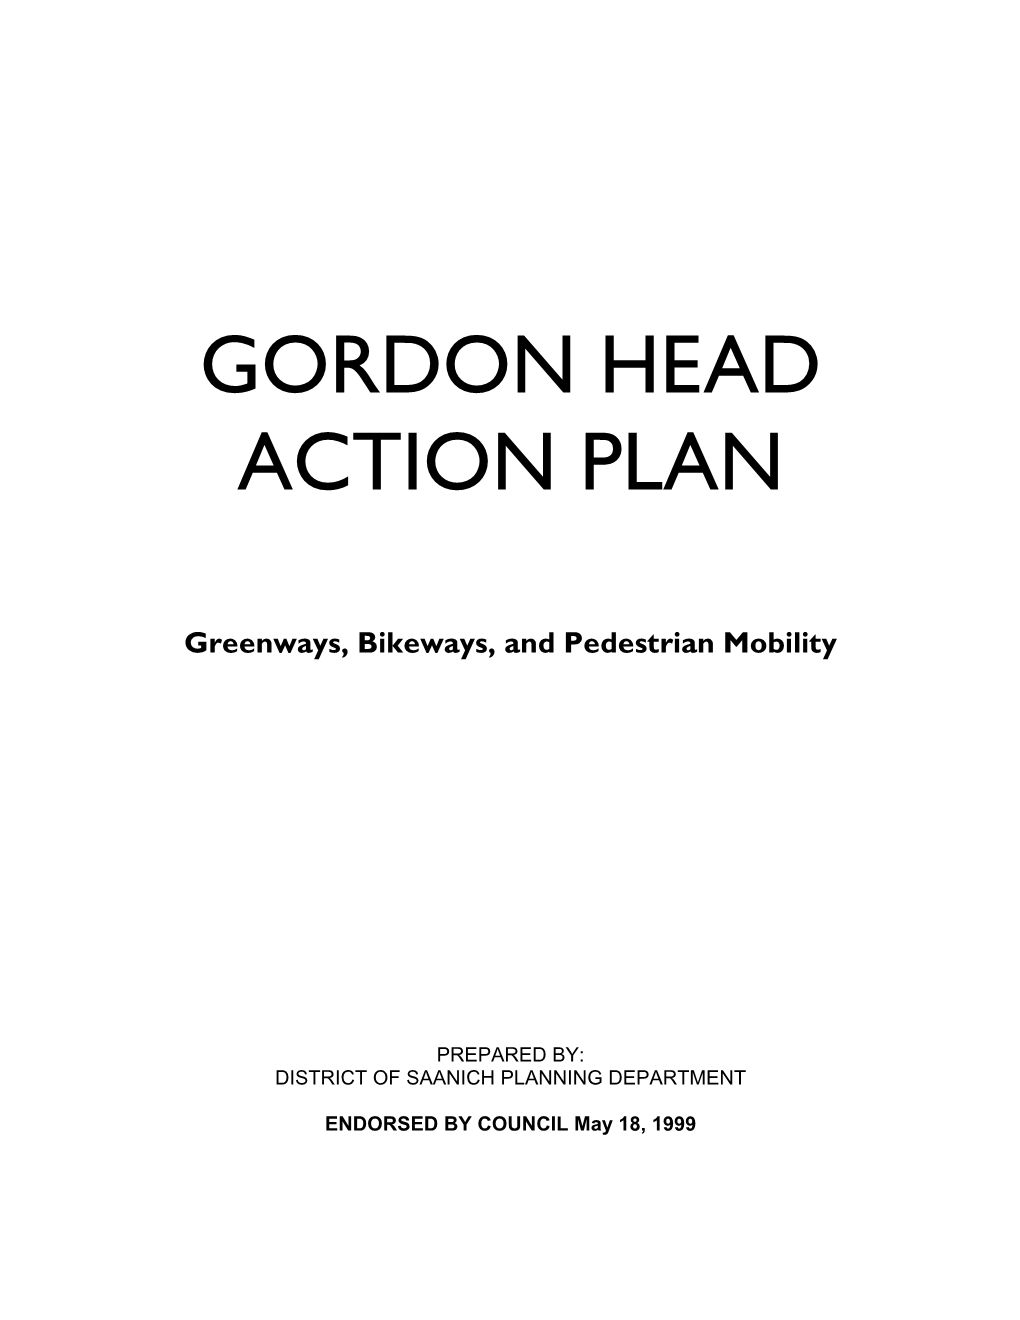 Gordon Head Action Plan